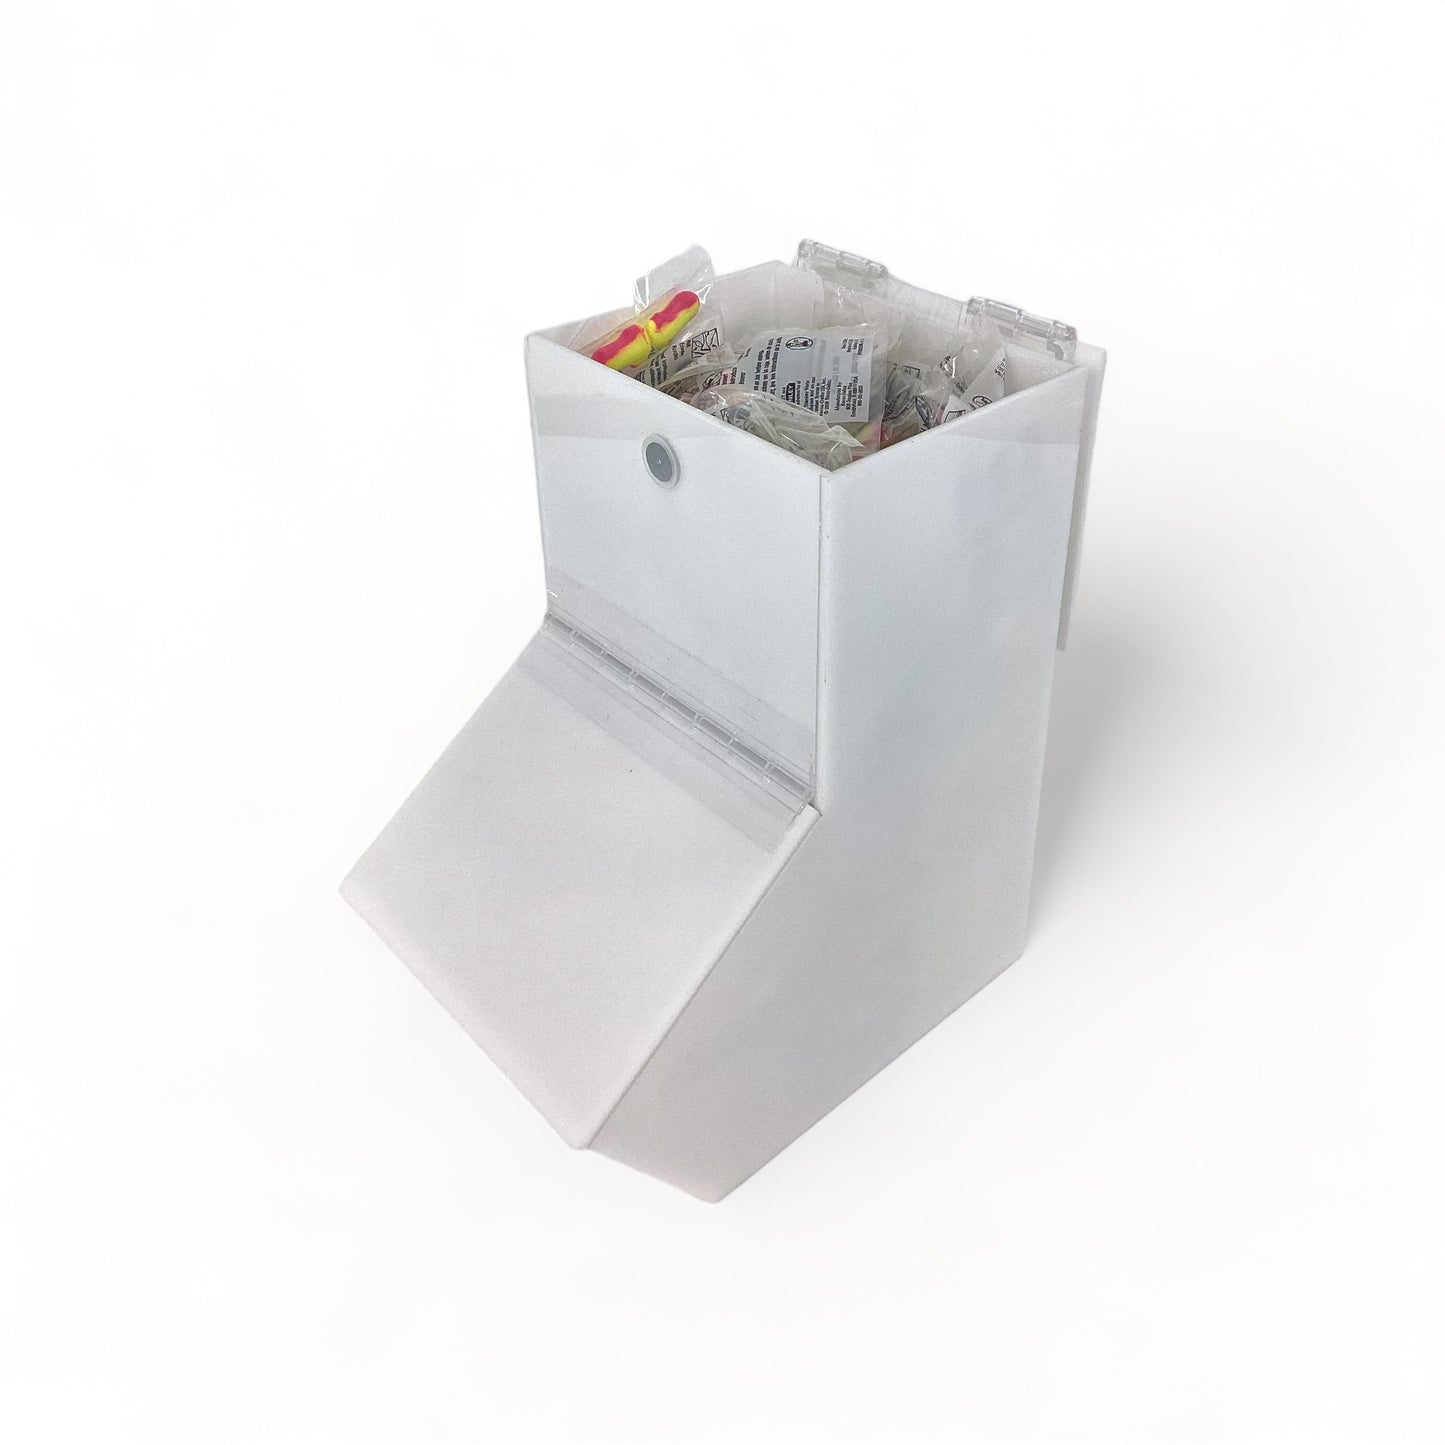 Acrylic Wall-Mountable Dispenser Bin with Magnetic Door Catch